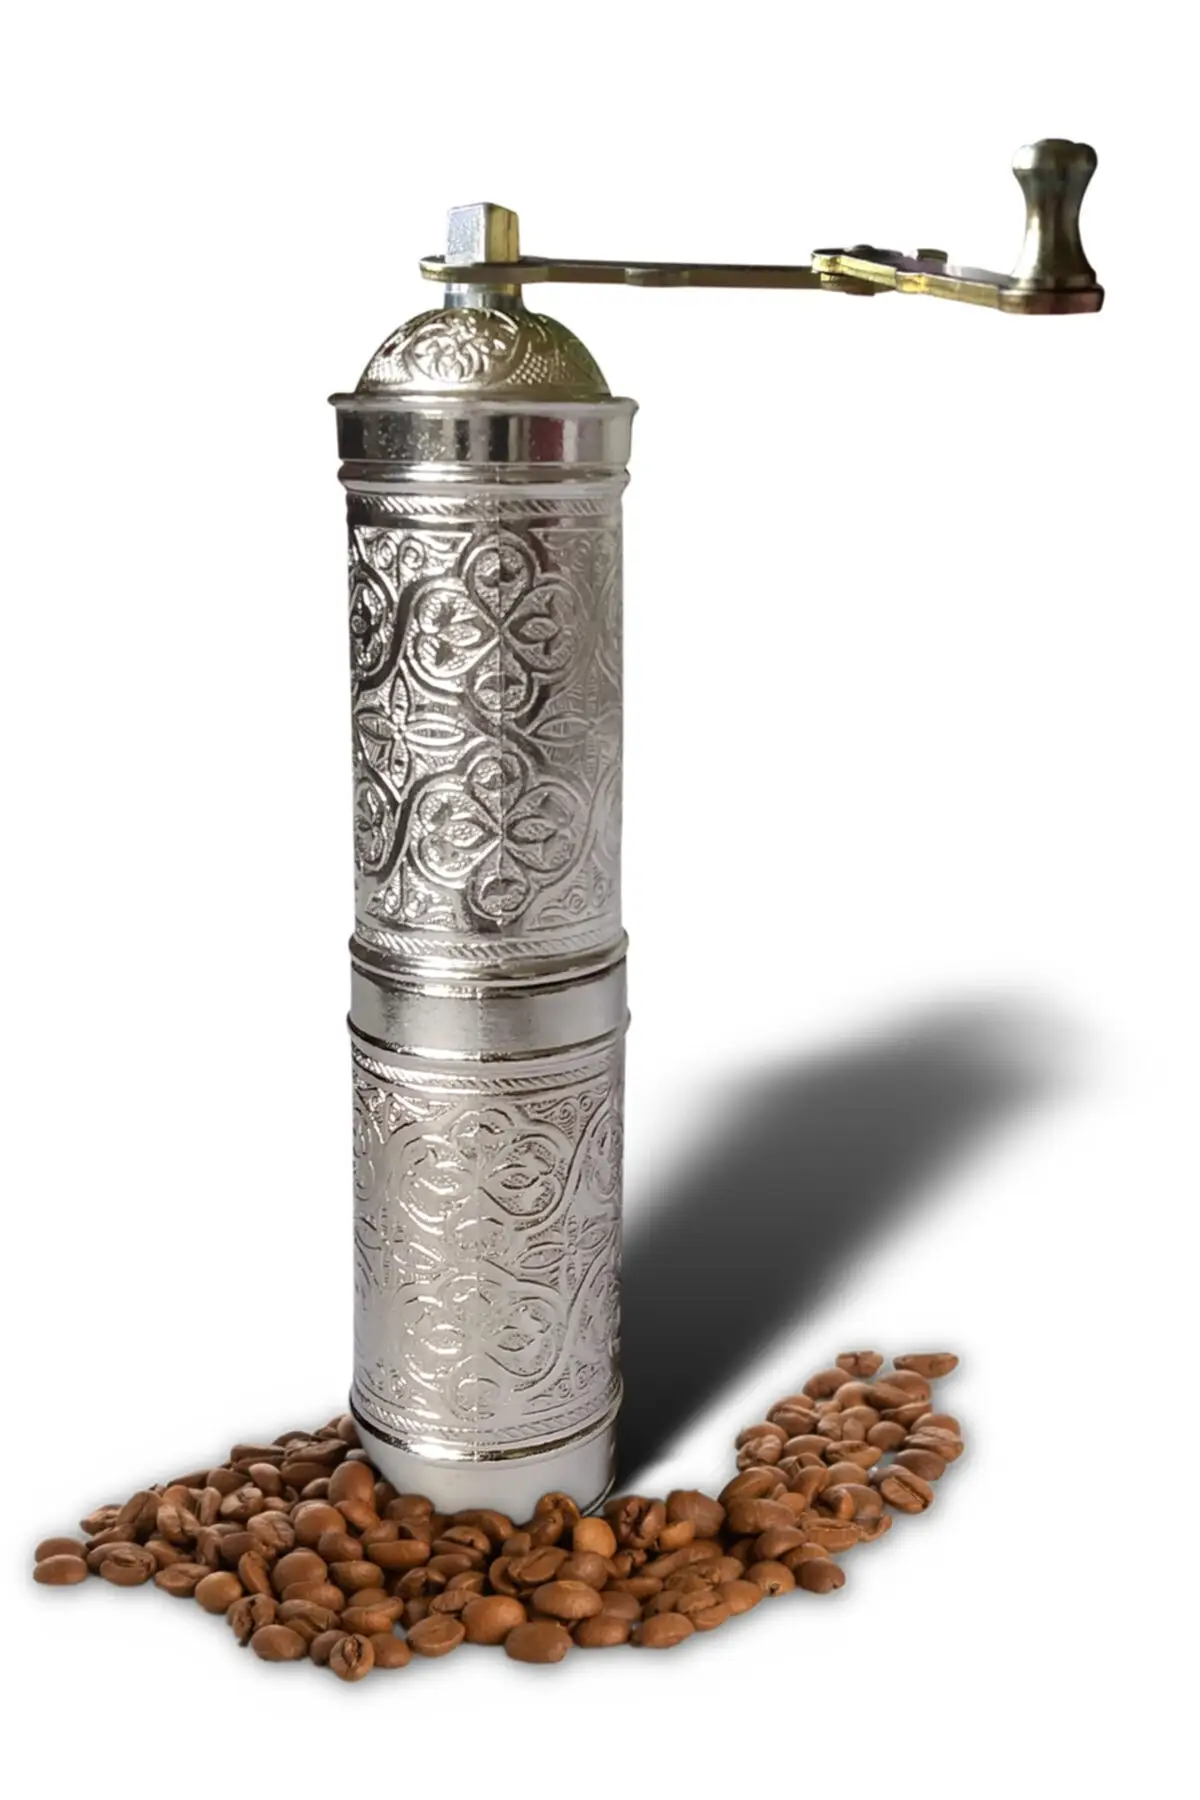 Nostalgic Ottoman Coffee And Spices Grinder Btb-651